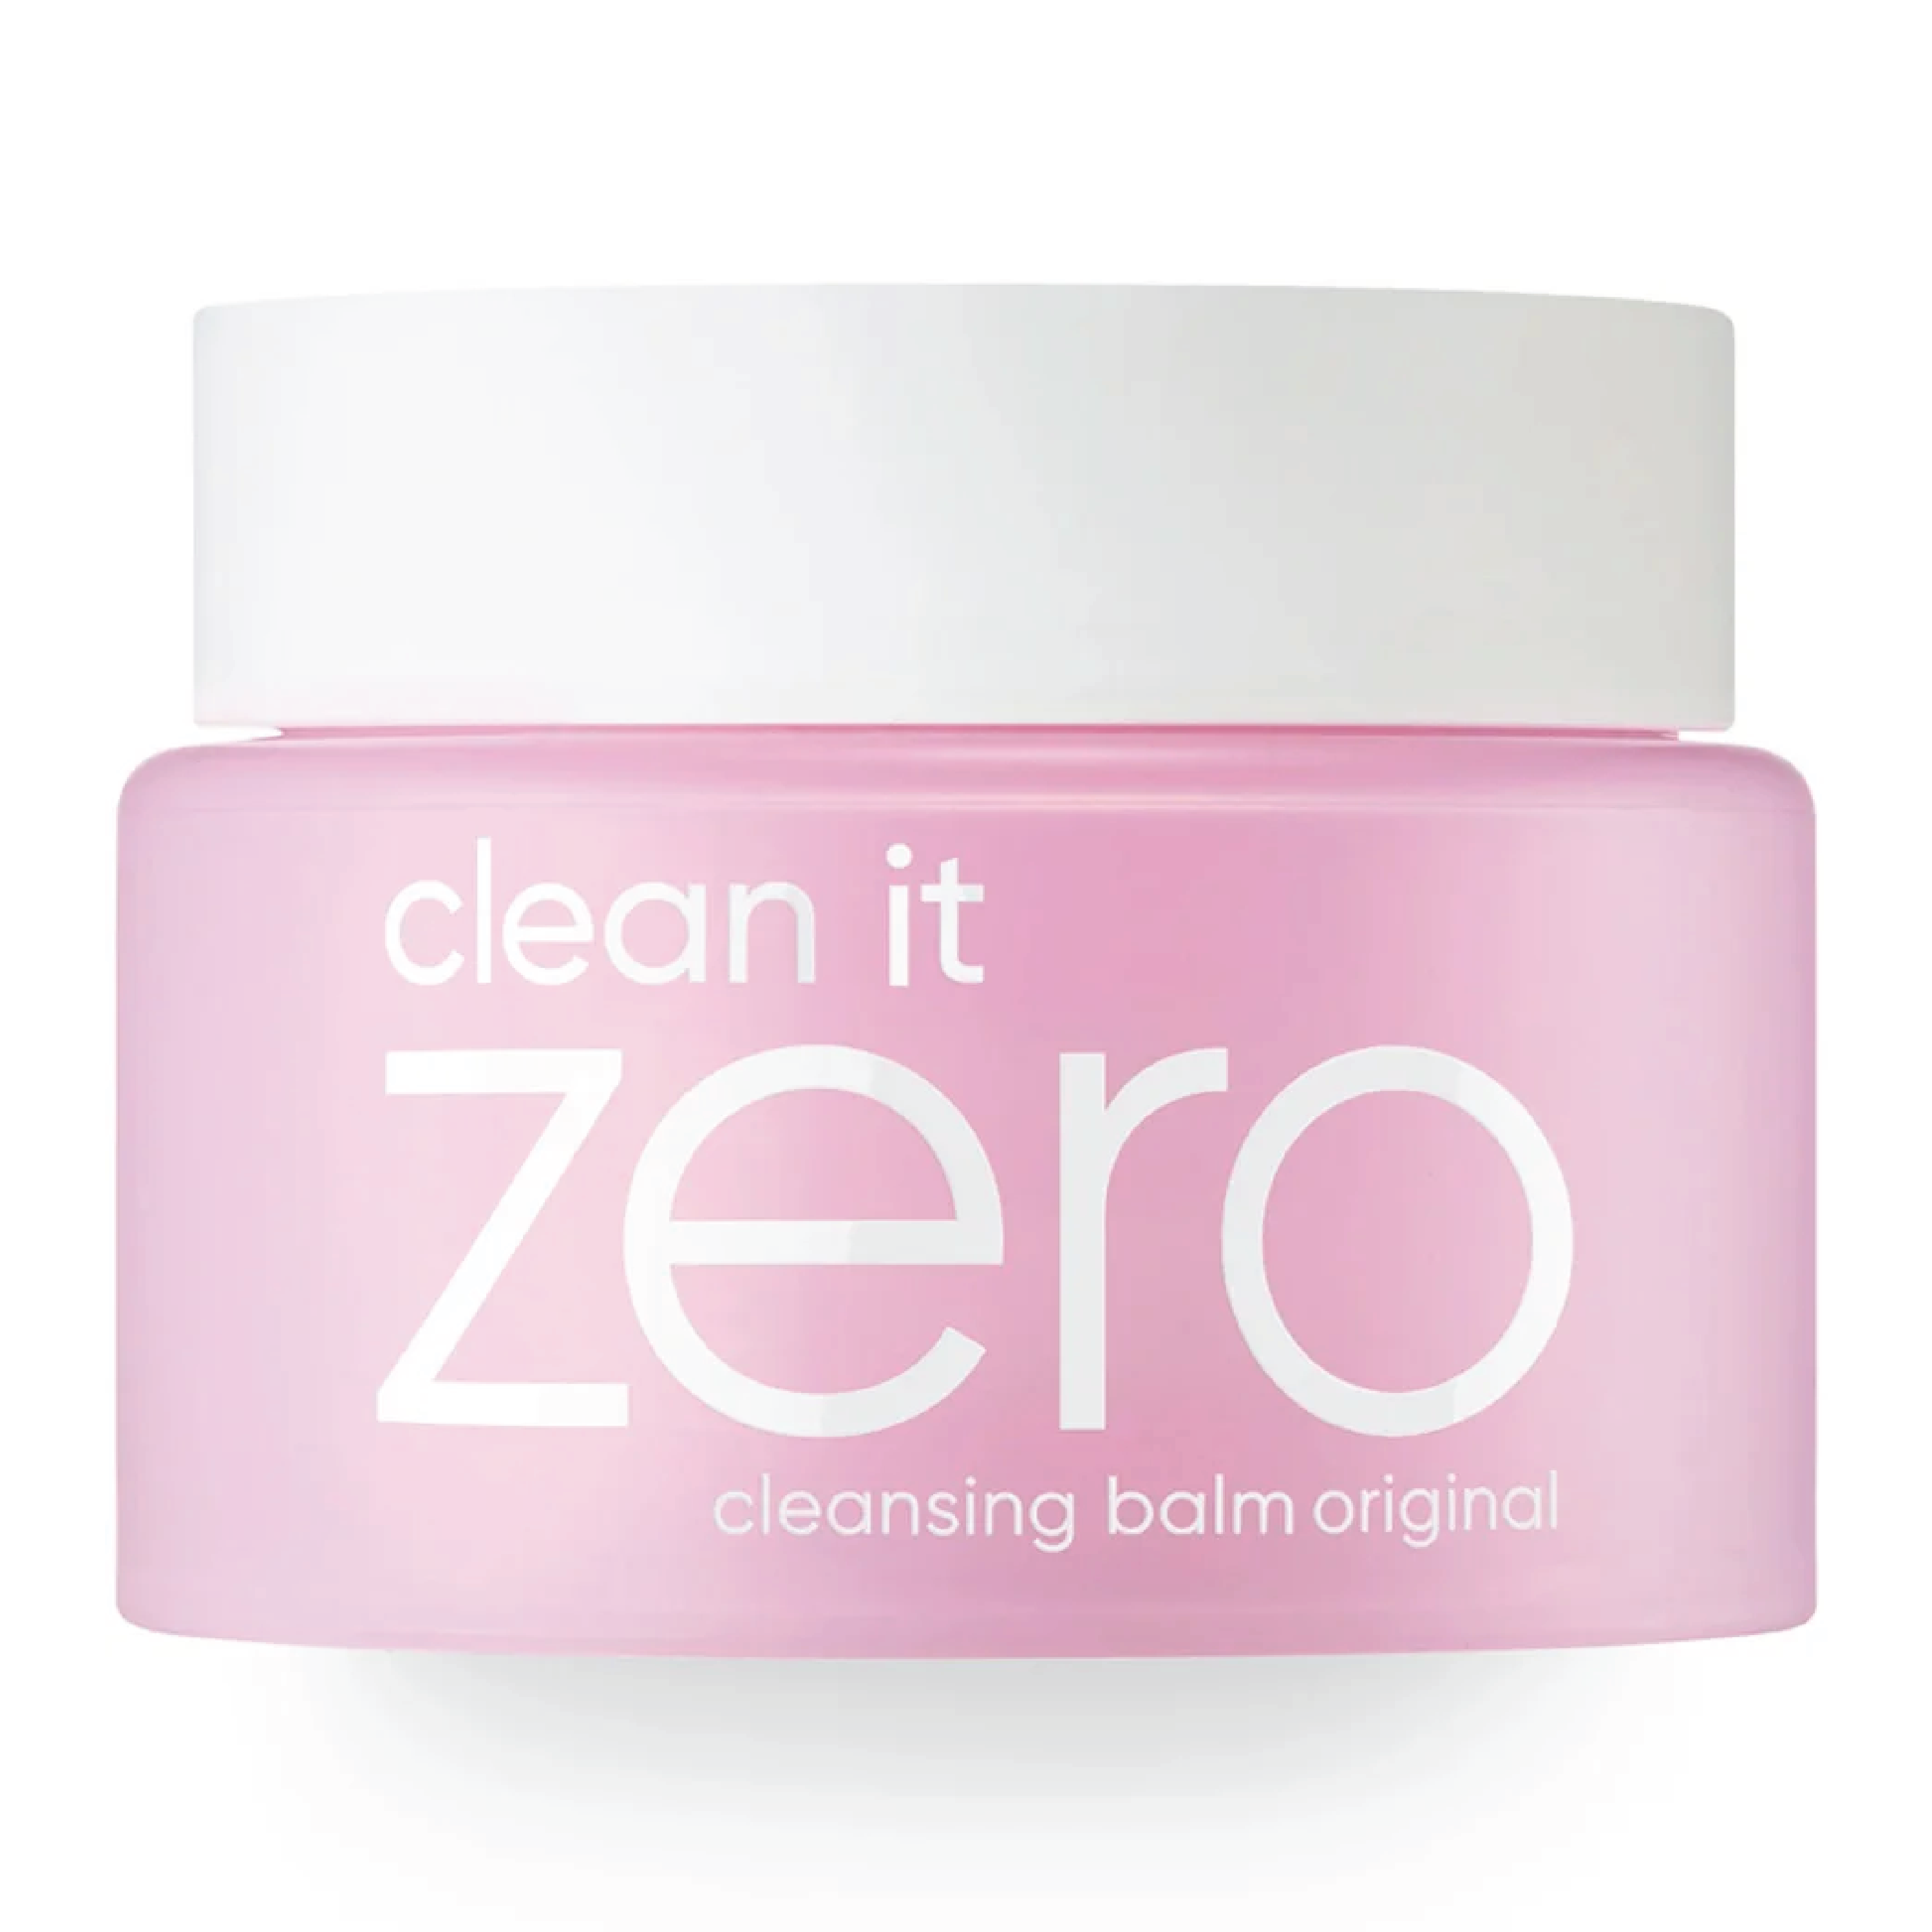 Banila Co Clean It Zero Cleansing Balm Original, 100 ml